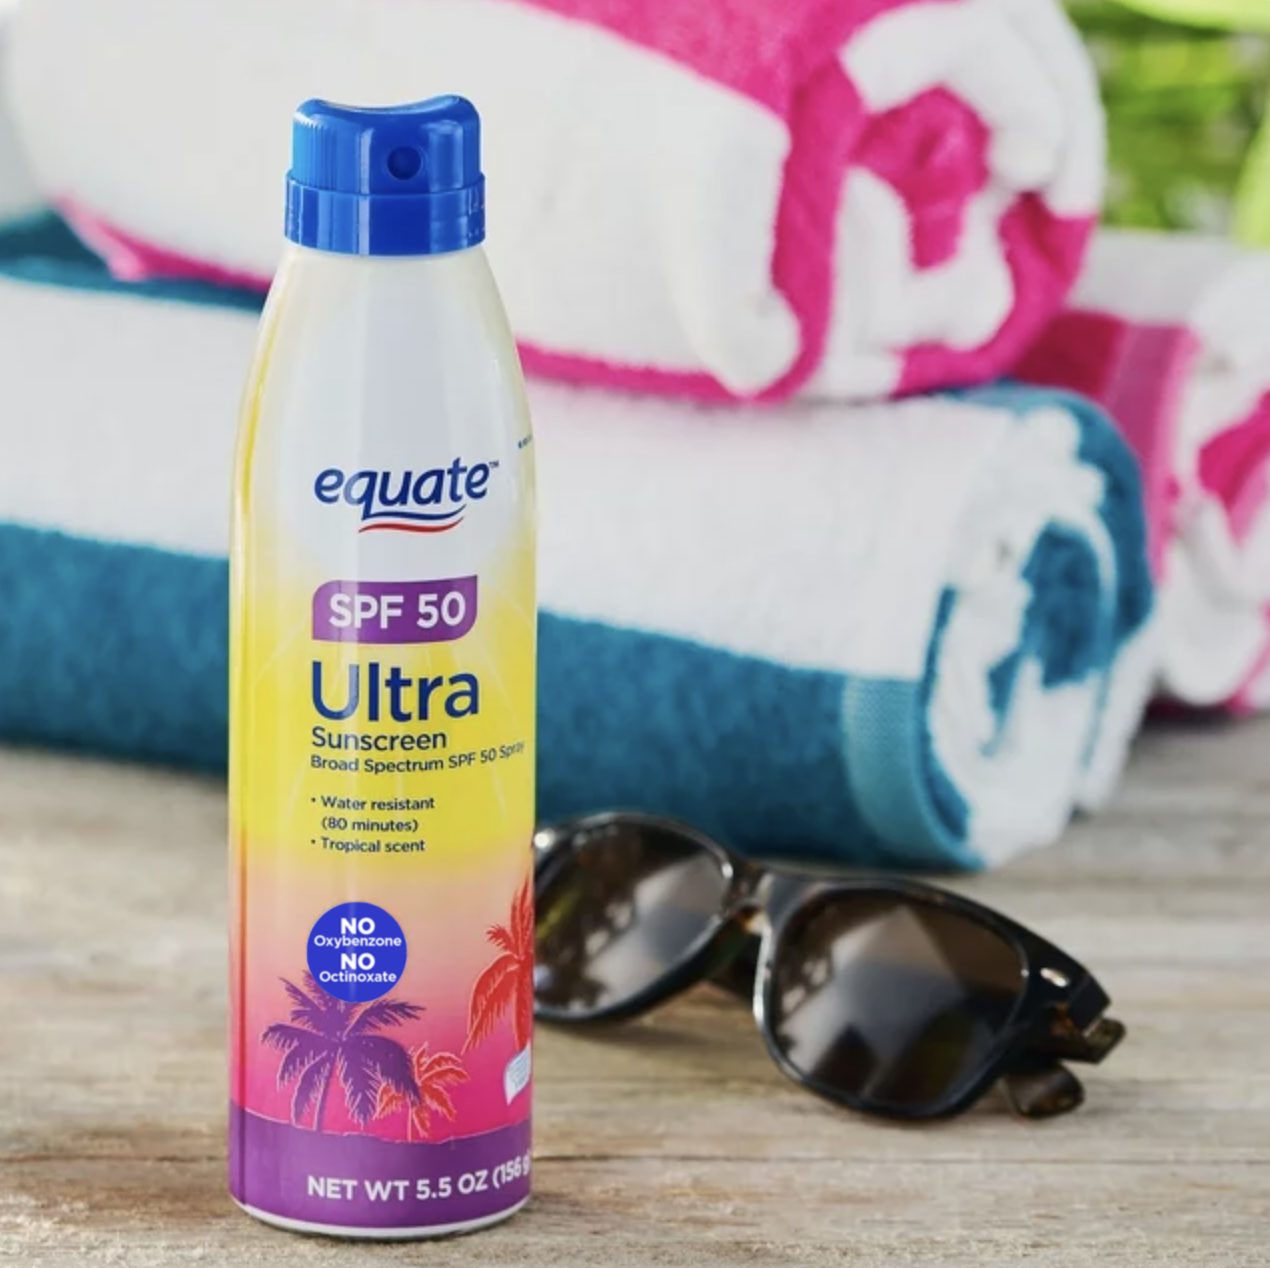 Equate Ultra Broad Spectrum Sunscreen Spray, SPF 50, 5.5 oz - image 2 of 8